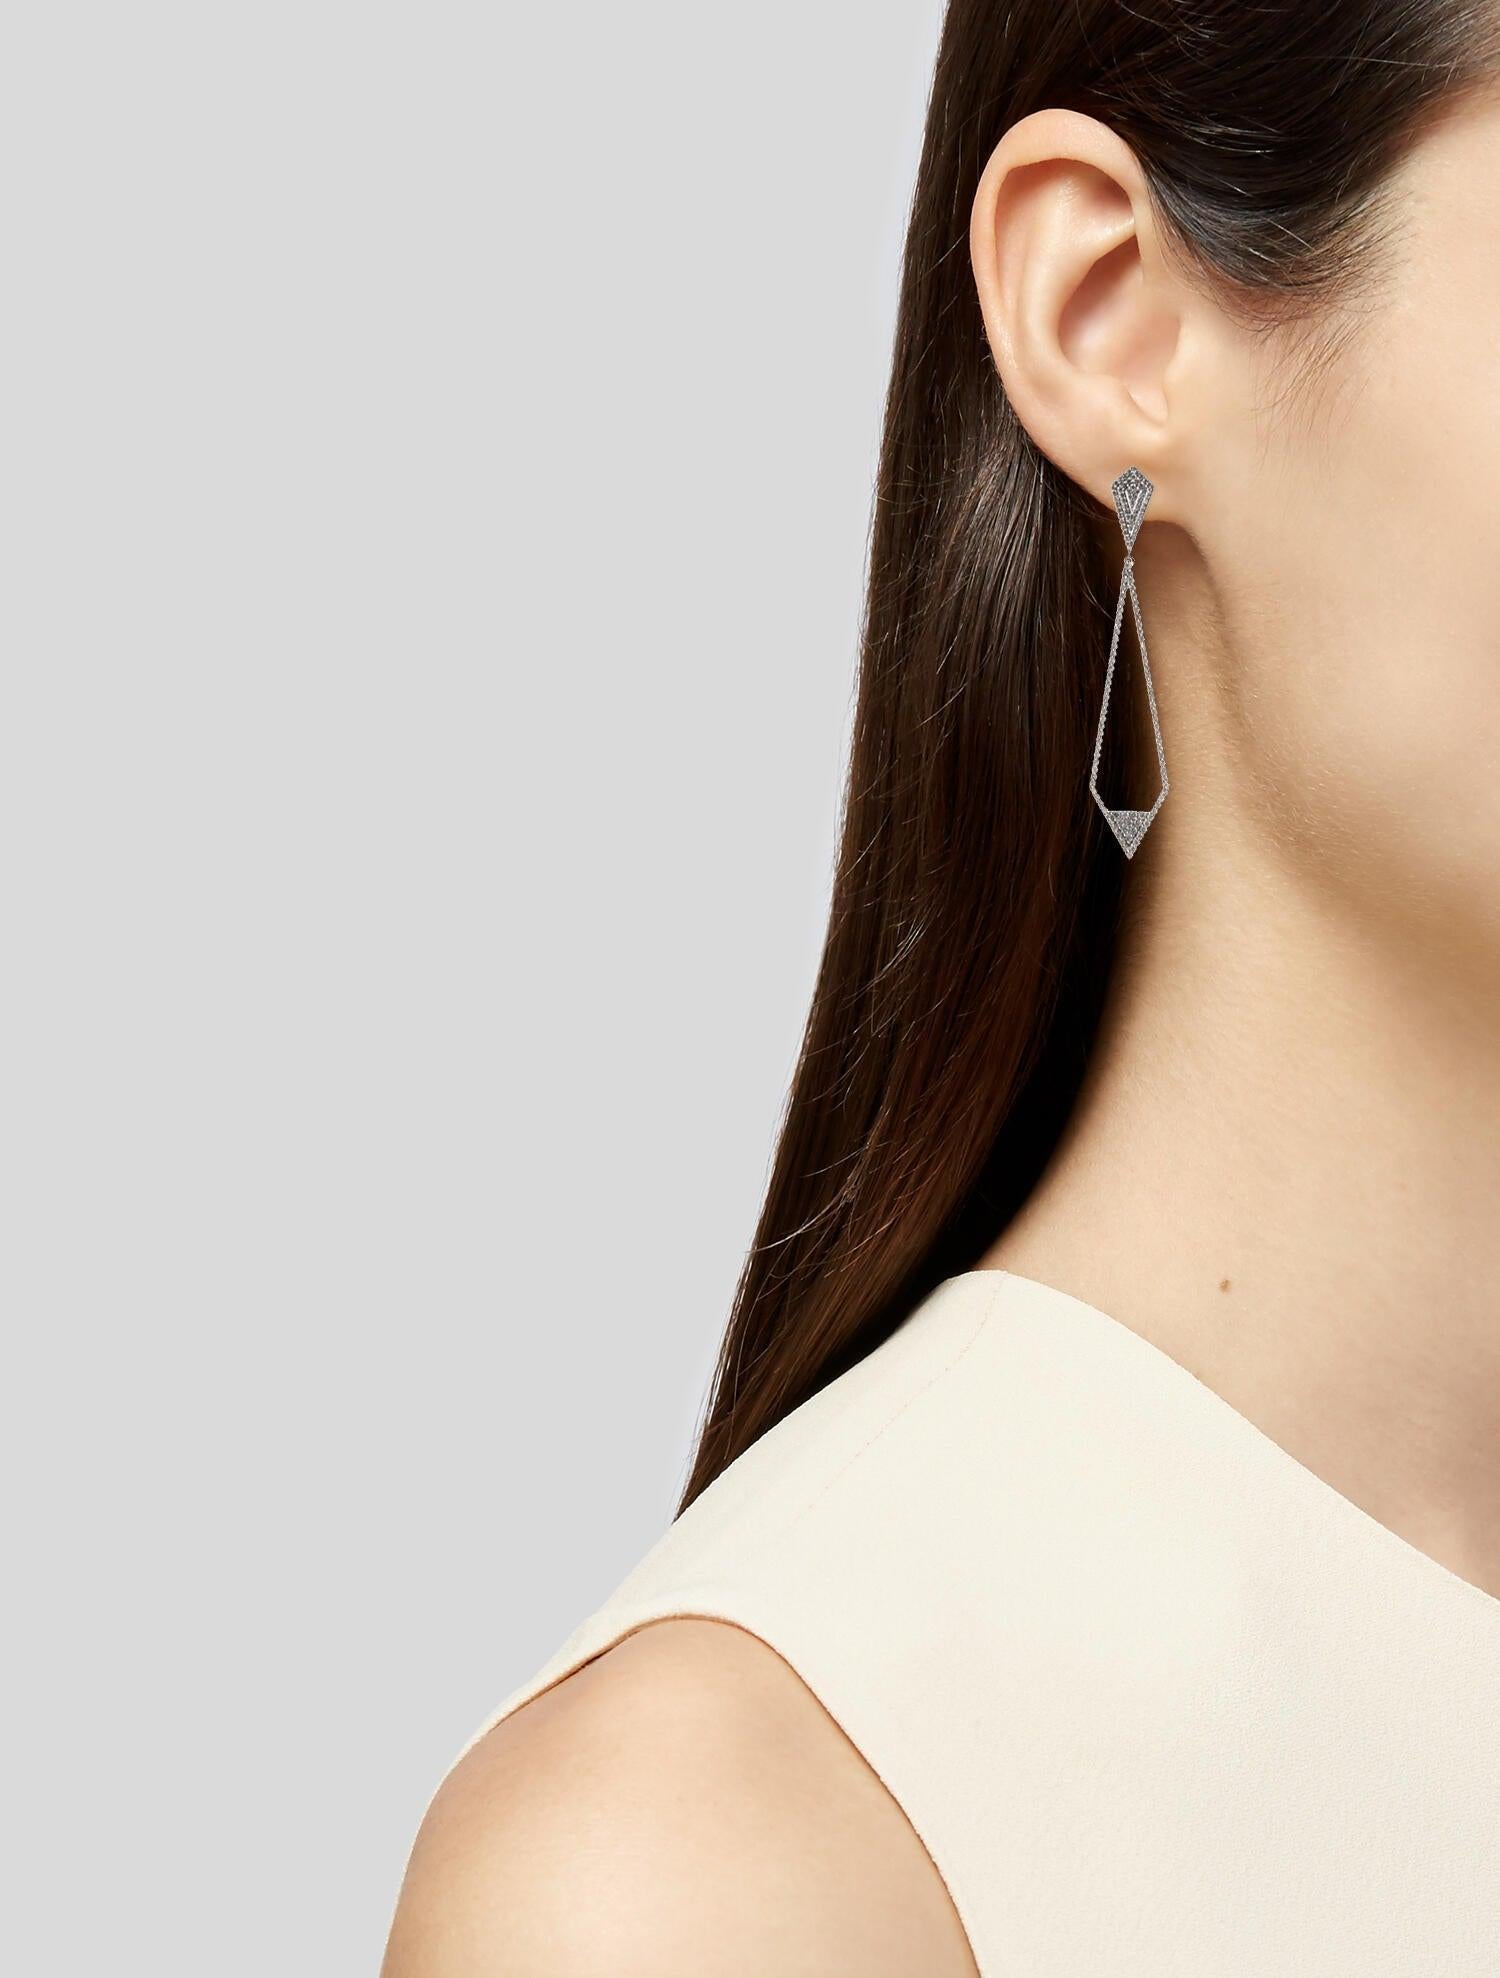 Stunning 14K Diamond Drop Earrings - 1.13ctw Sparkle & Style, Elegant Jewelry For Sale 1